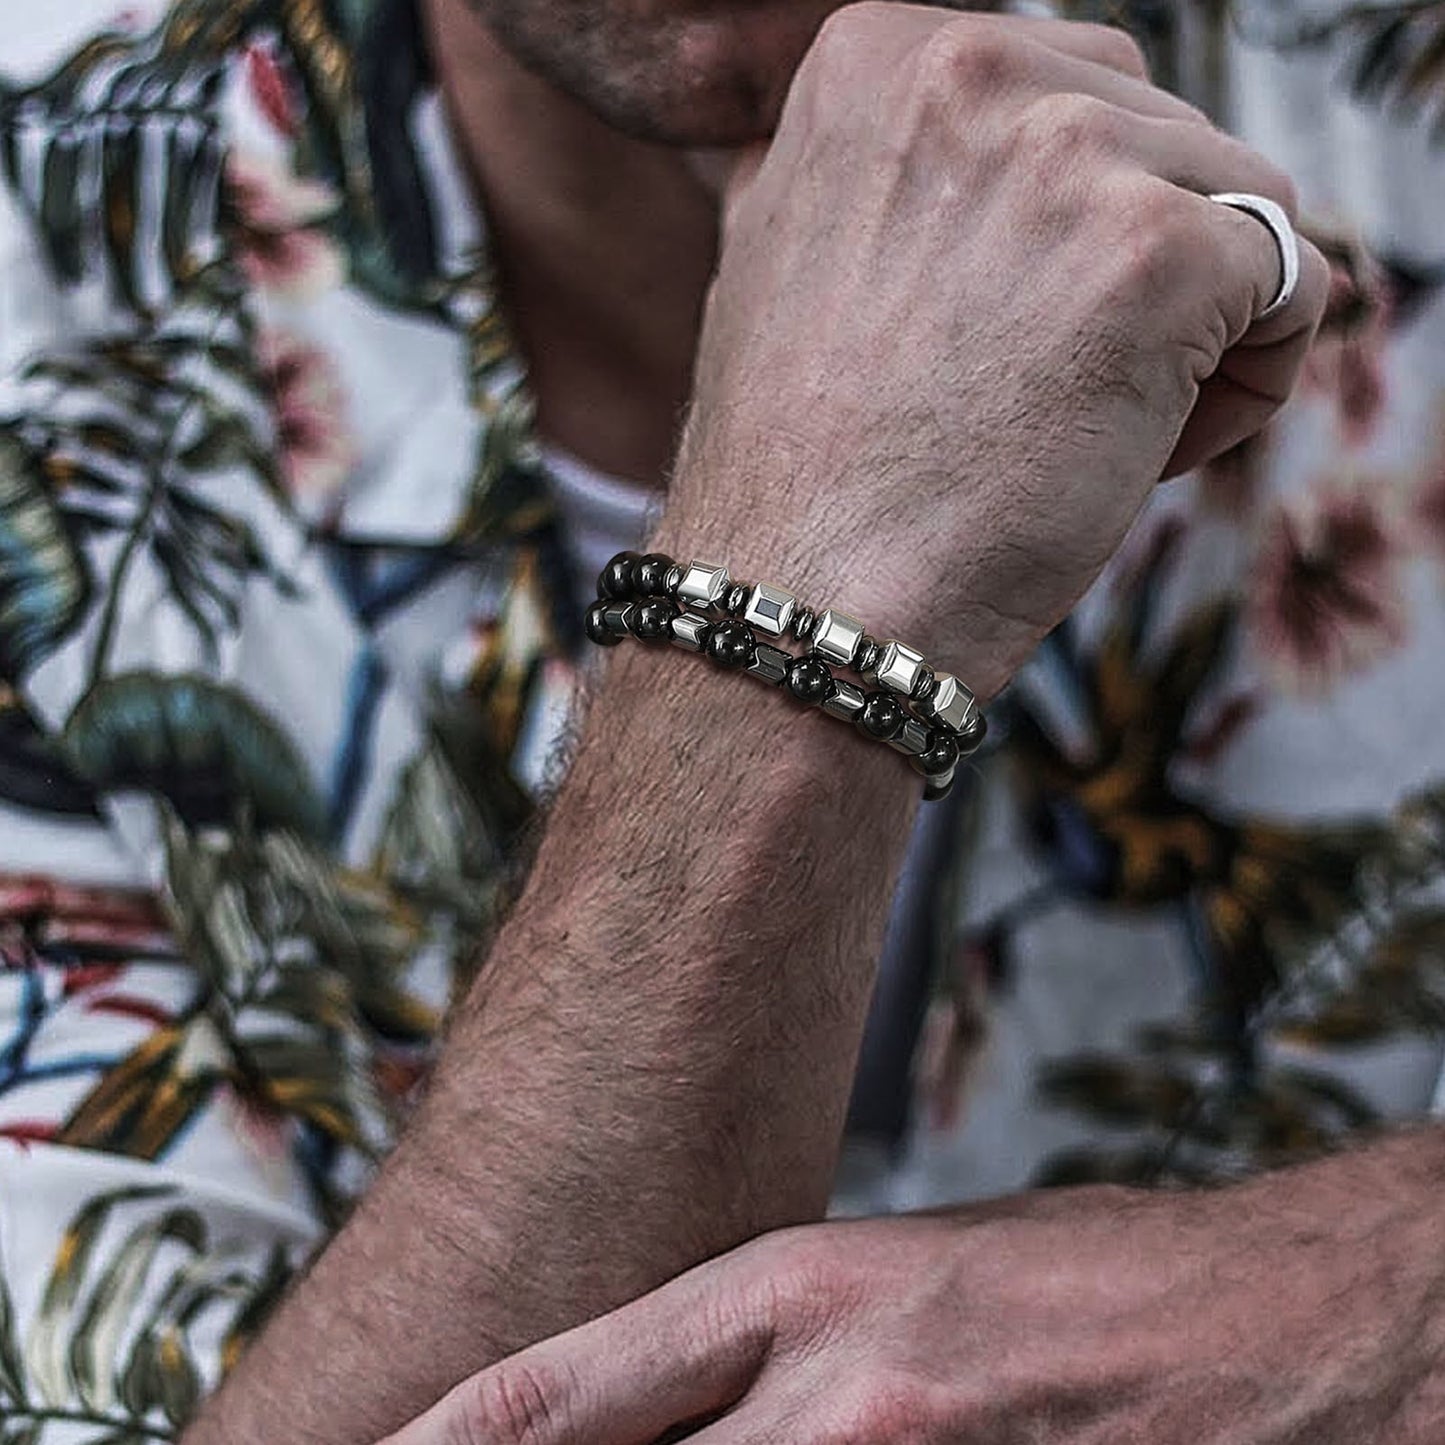 Bracelet Set for Men,6/8mm Natural Stone Boy Beads